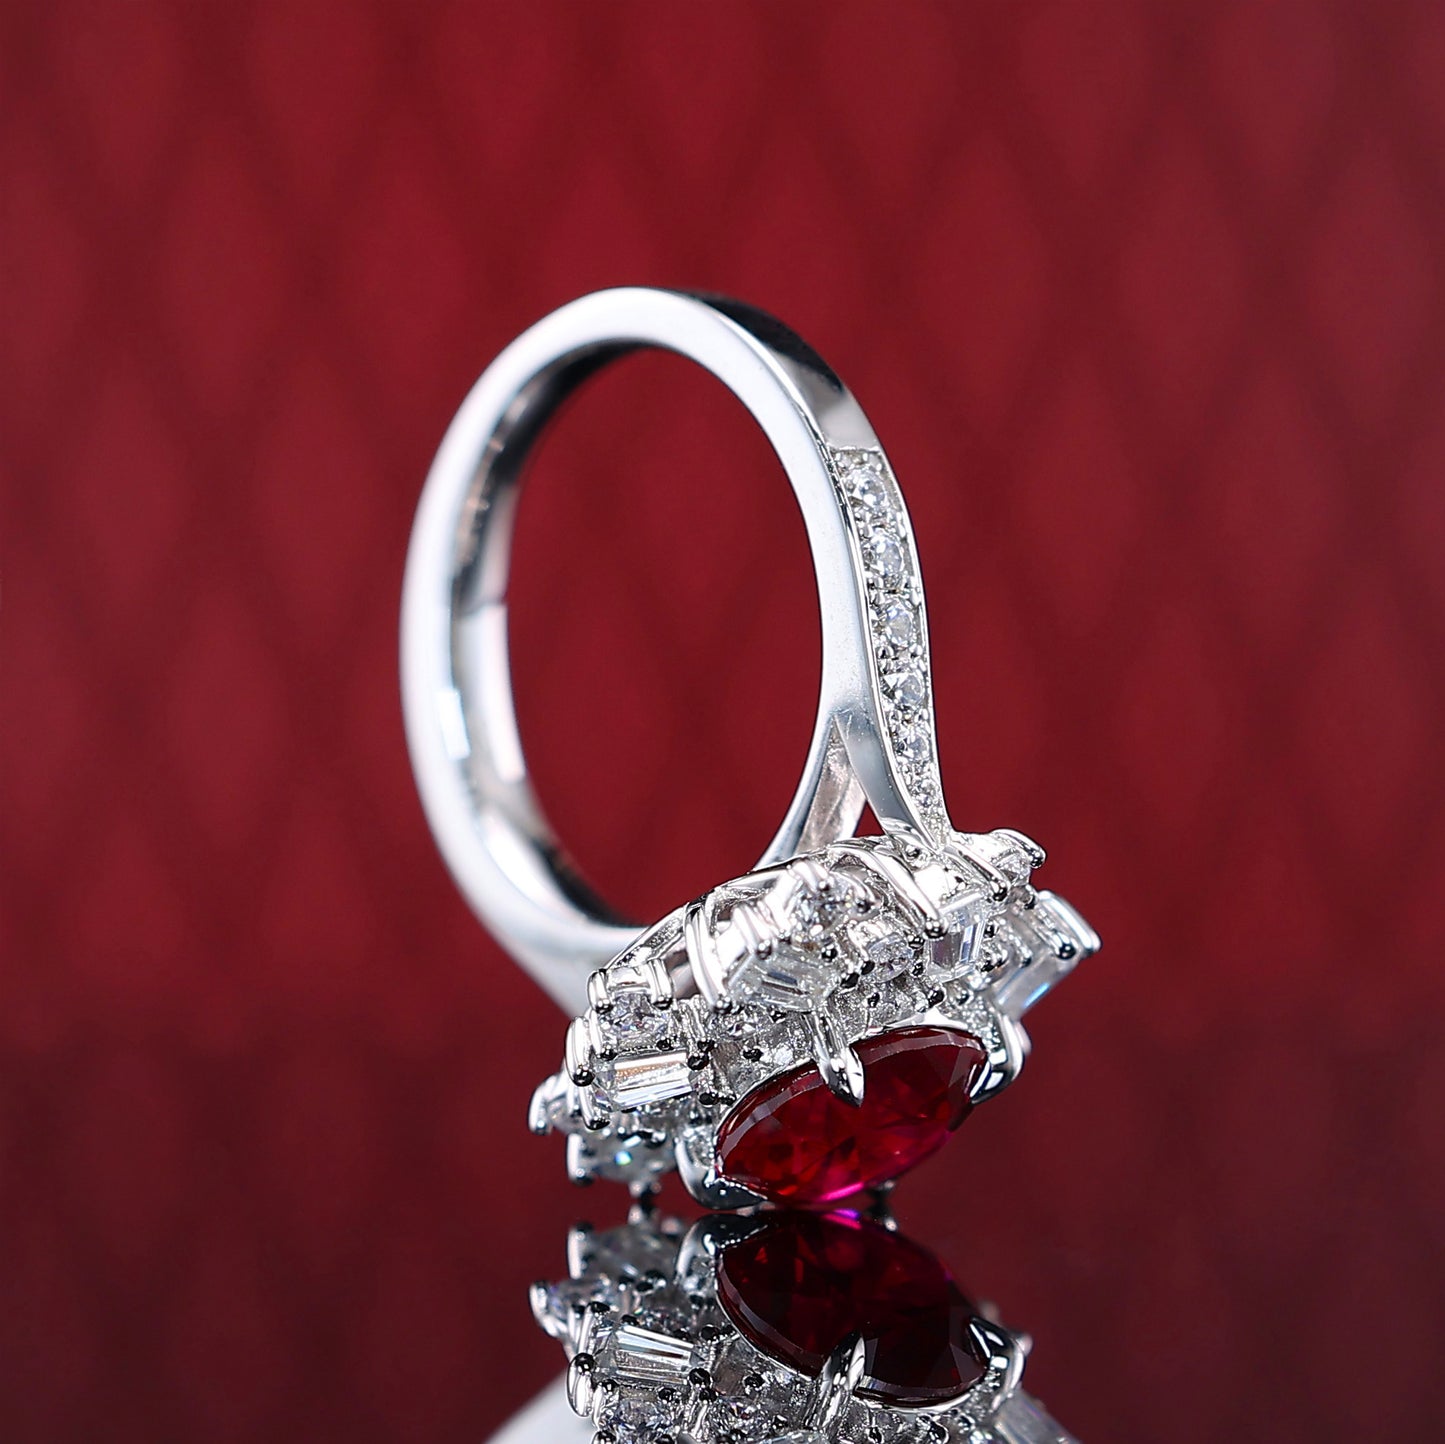 Rubinfarbener Ring mit unregelmäßigen Details in Mikrofassung, Sterlingsilber